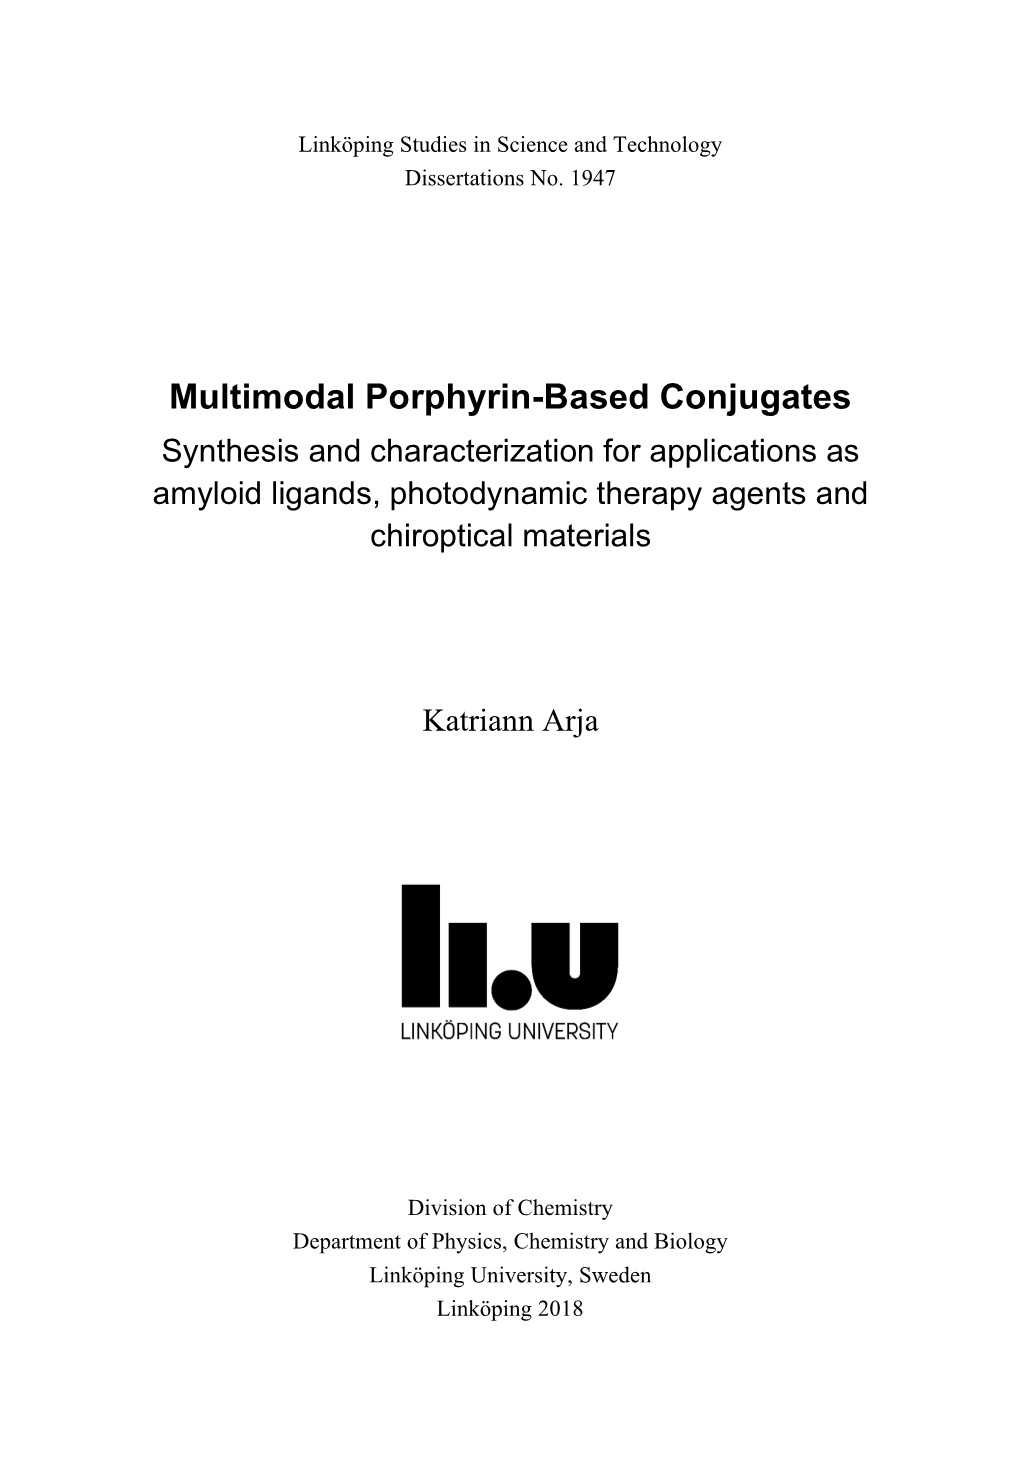 Multimodal Porphyrin-Based Conjugates